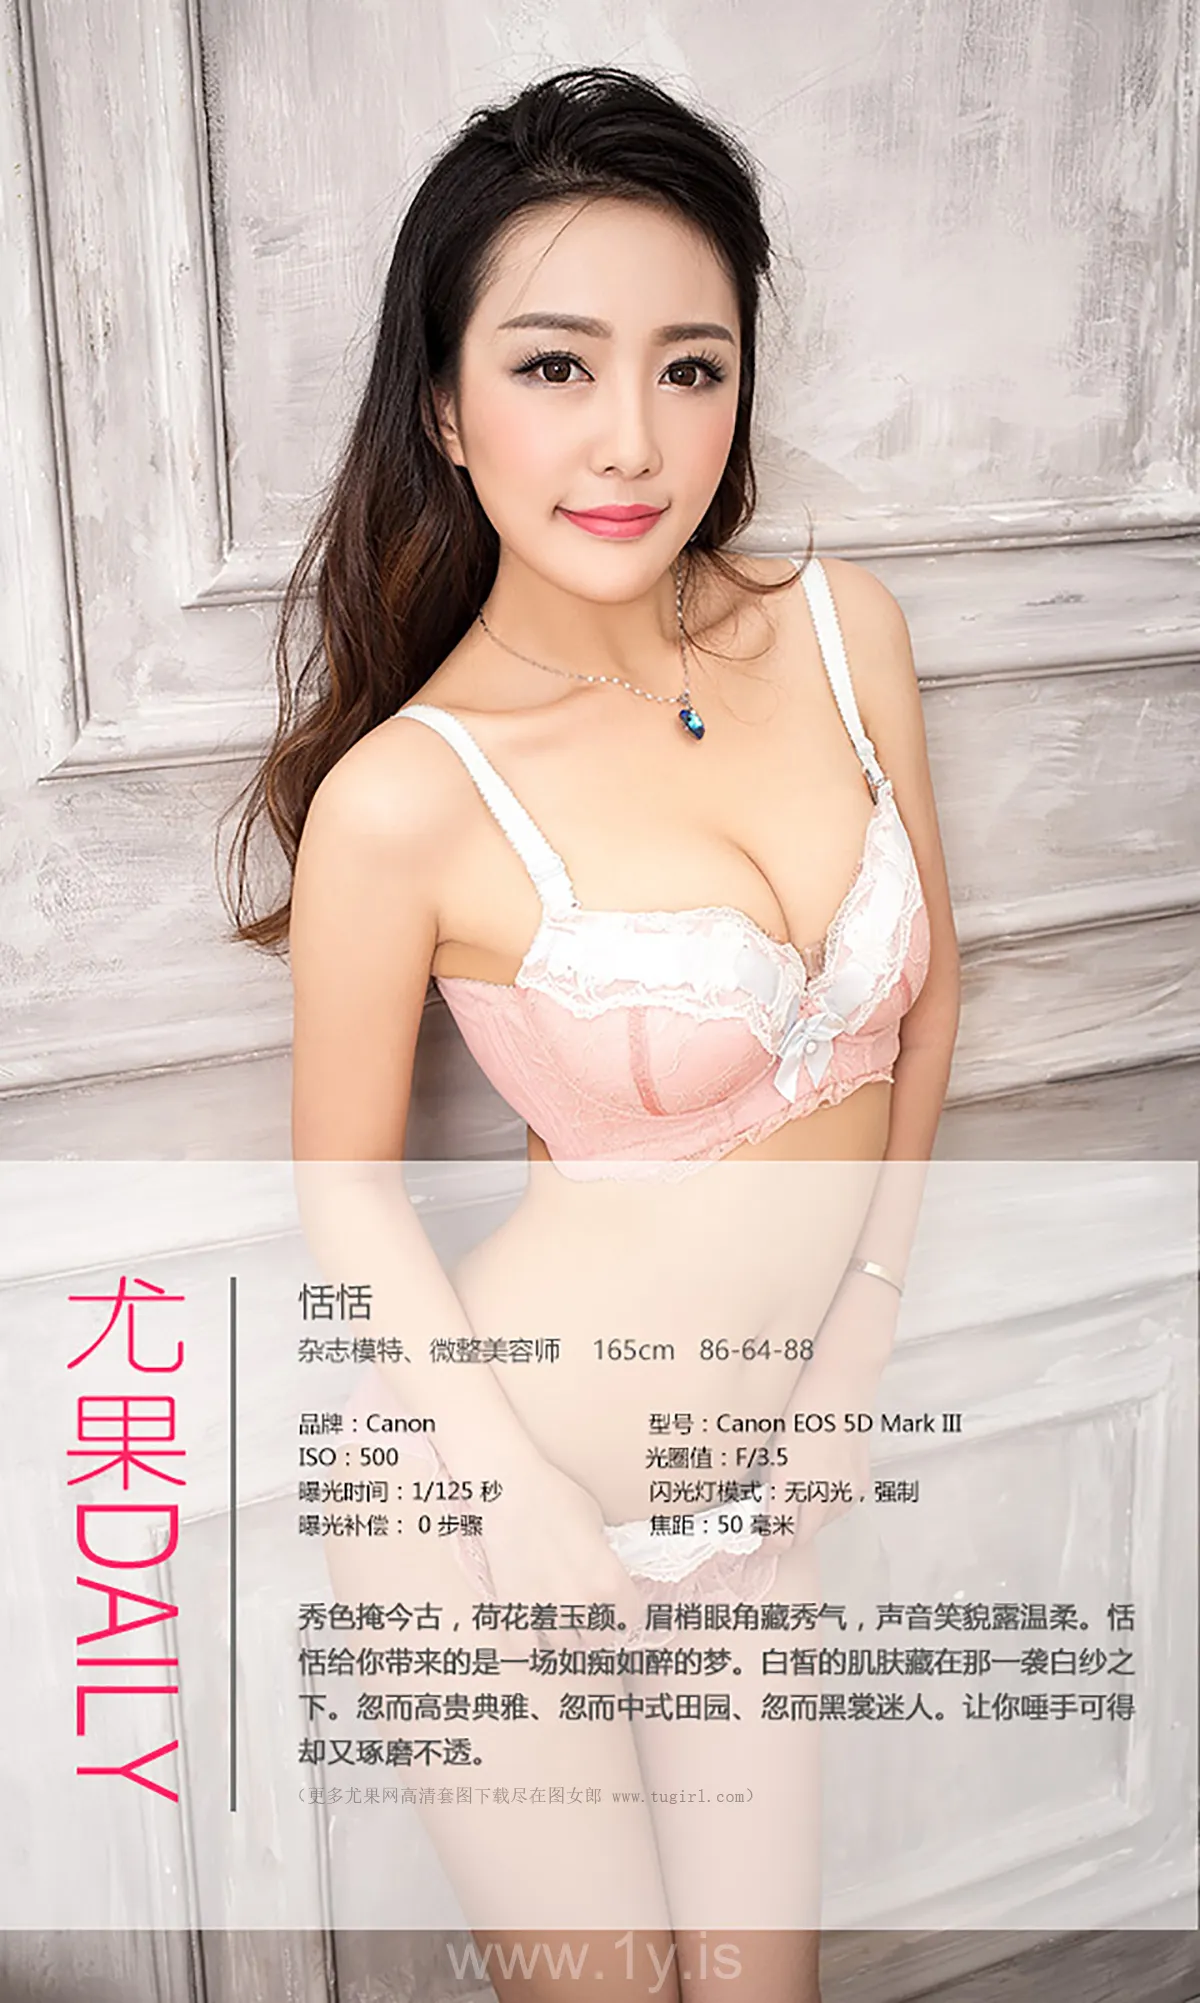 UGIRLS NO.390 Pretty & Knockout Chinese Chick 孙媛熙